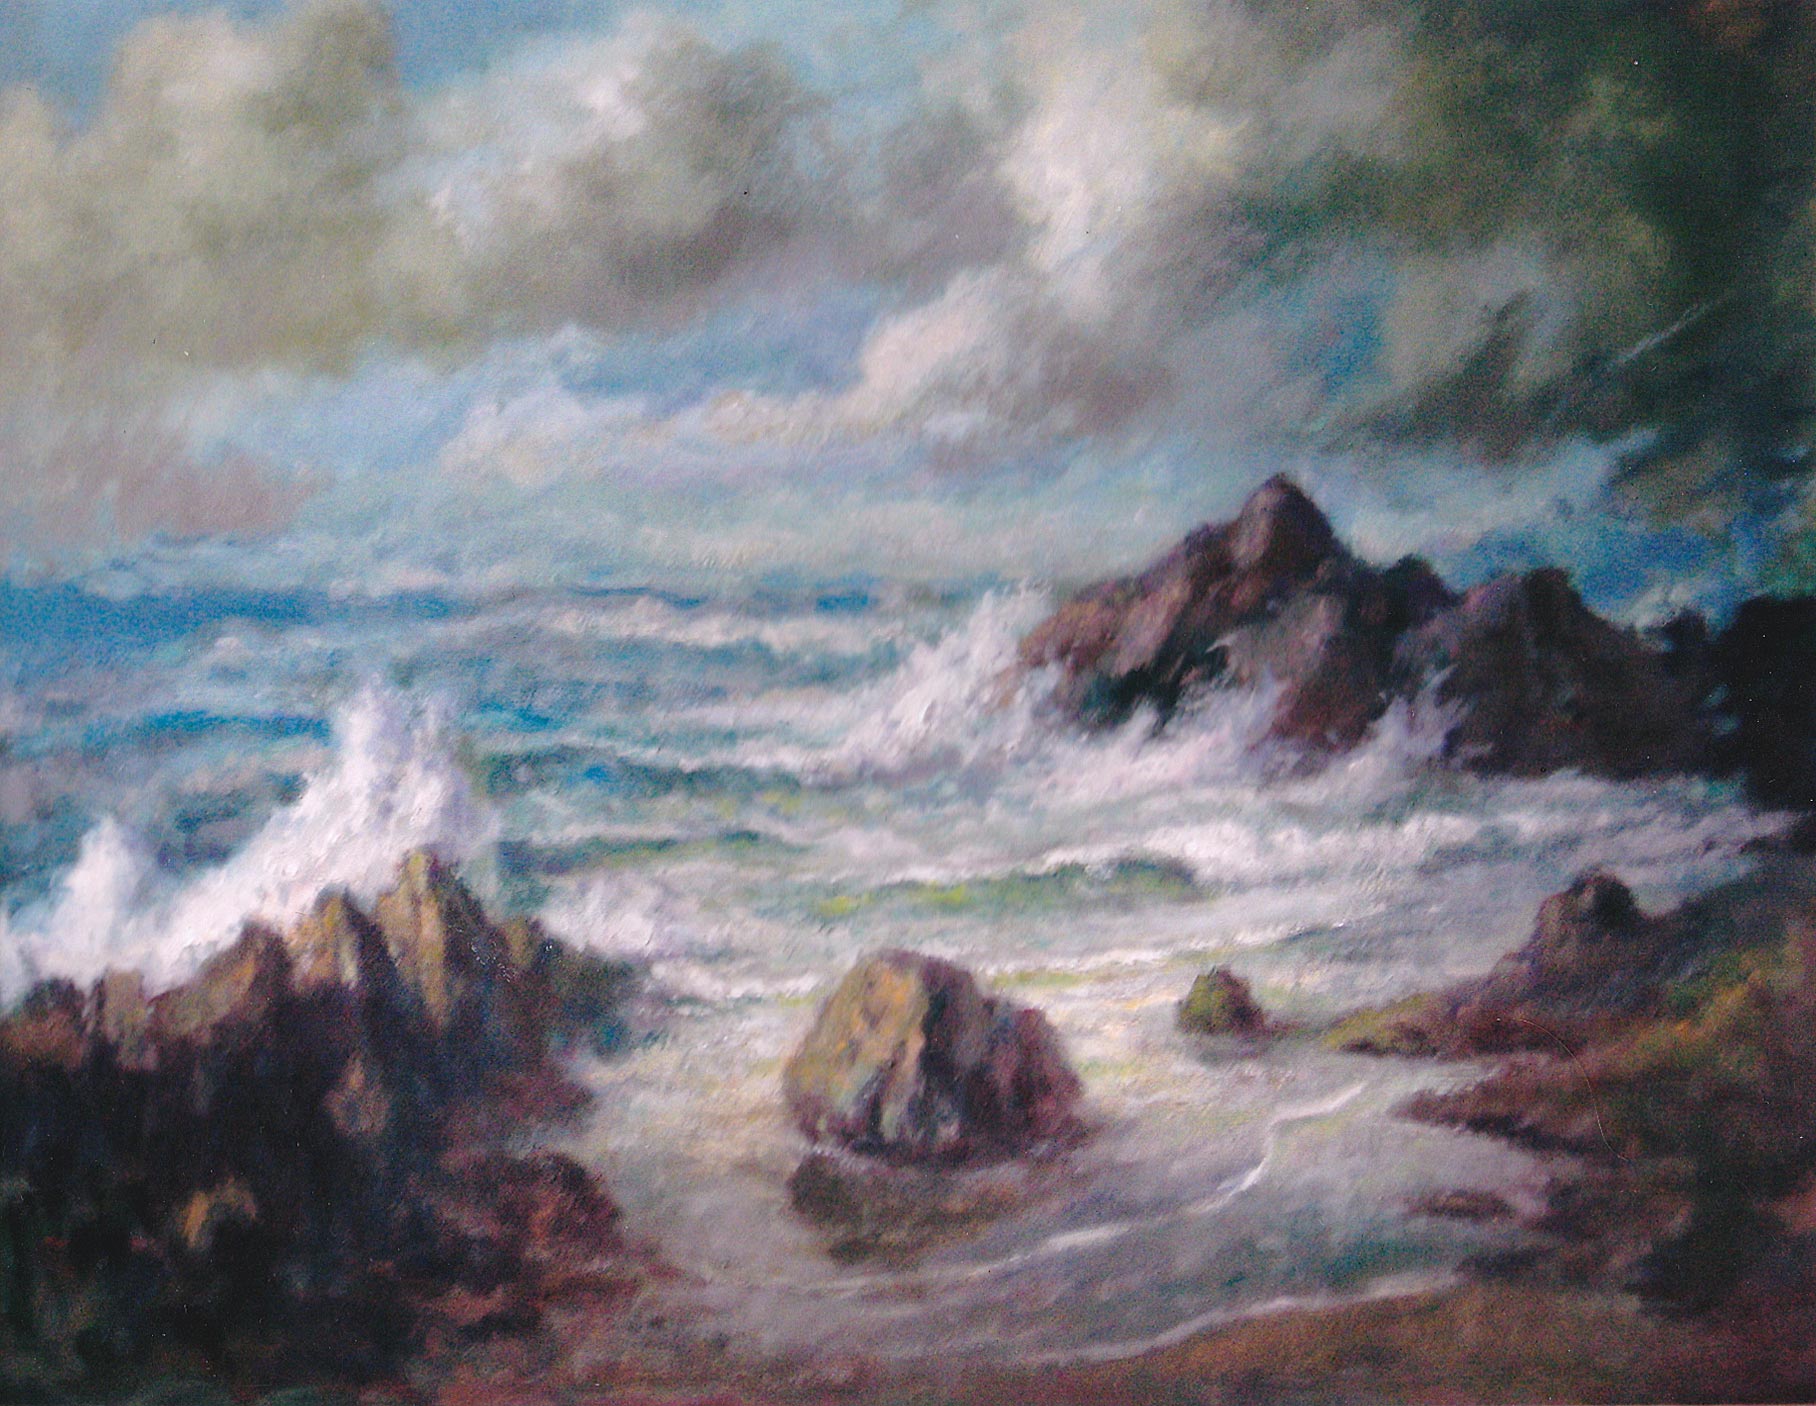 Seascape - Waves on rocks - North Berwick